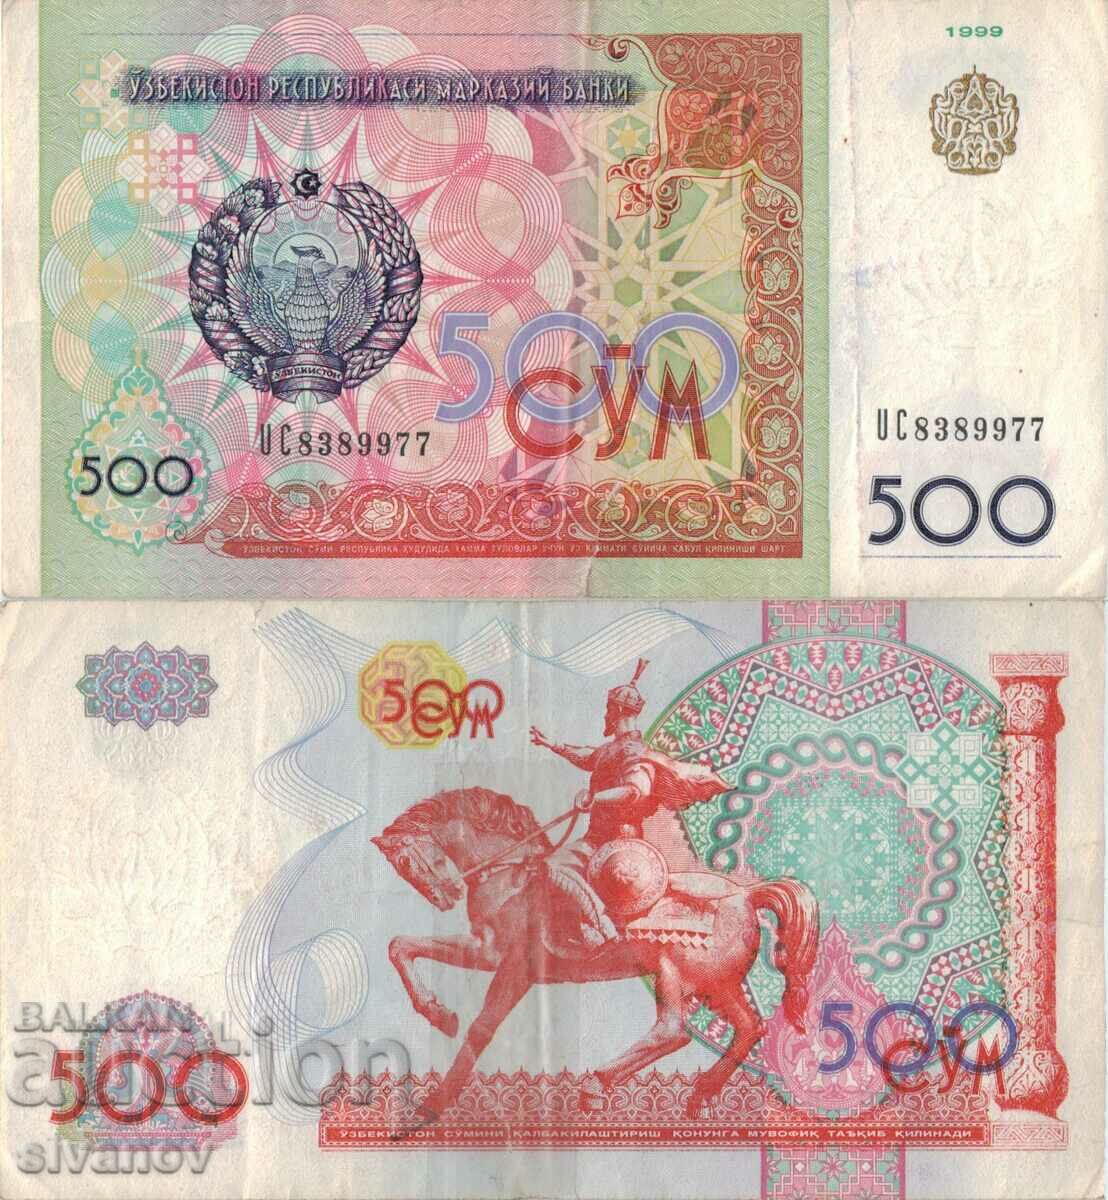 Uzbekistan 500 soum 1999 banknote #5338